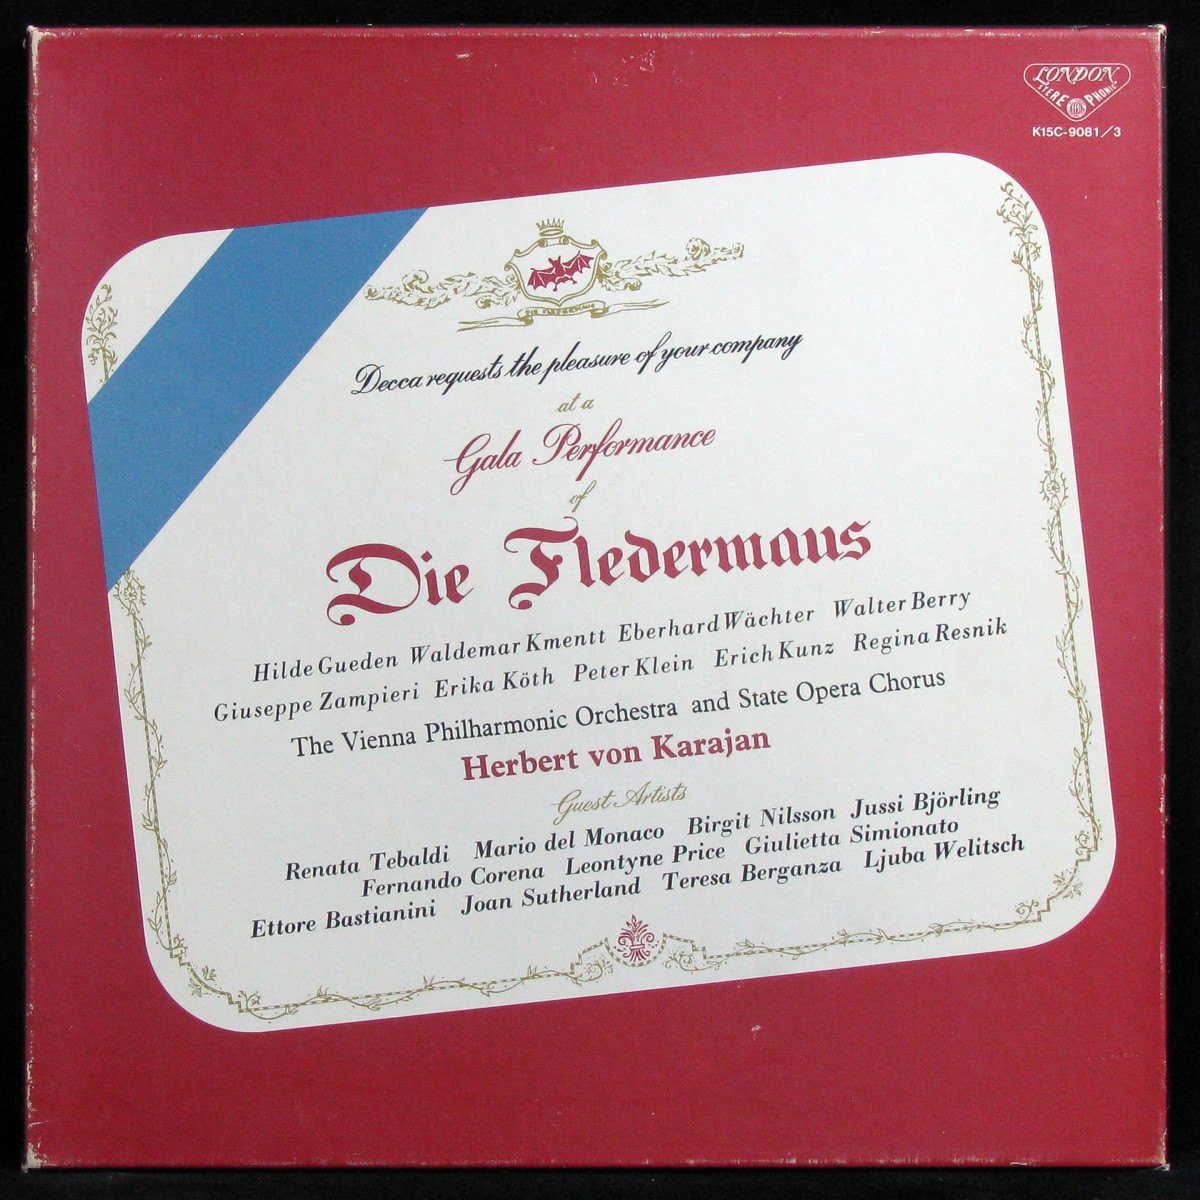 Strauss: Die Fledermaus Gala Performance